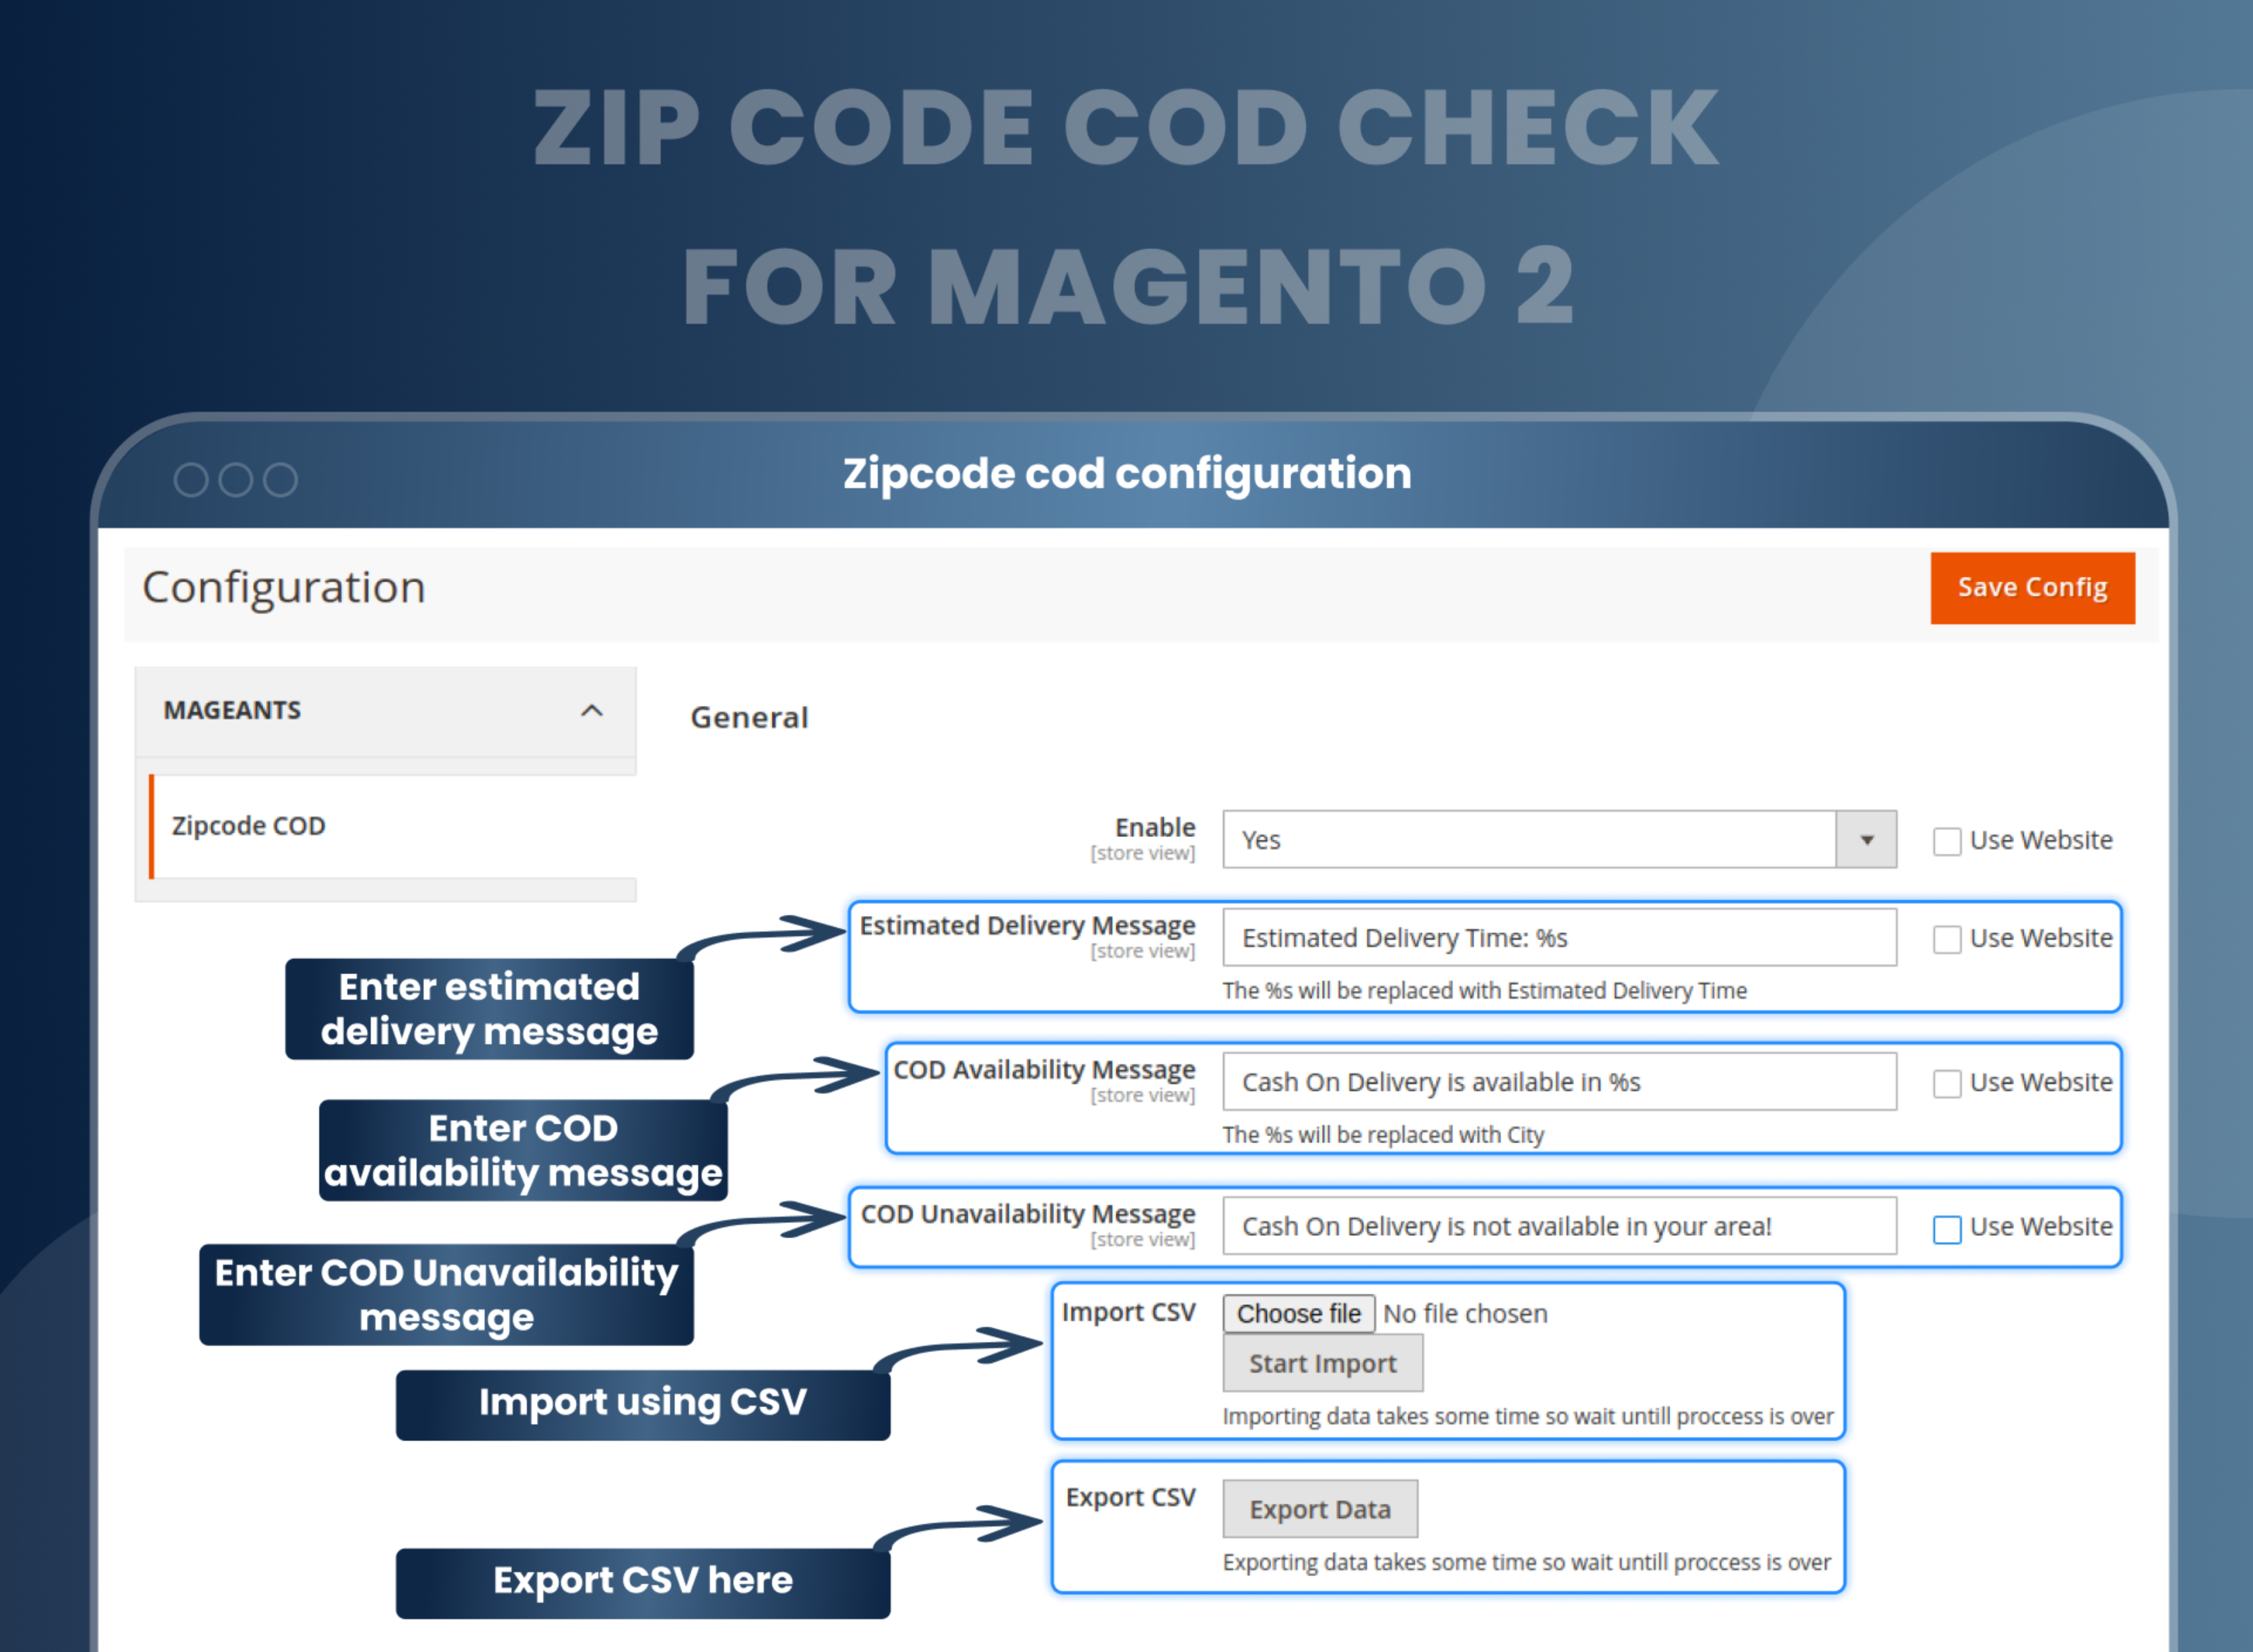  Zipcode cod configuration